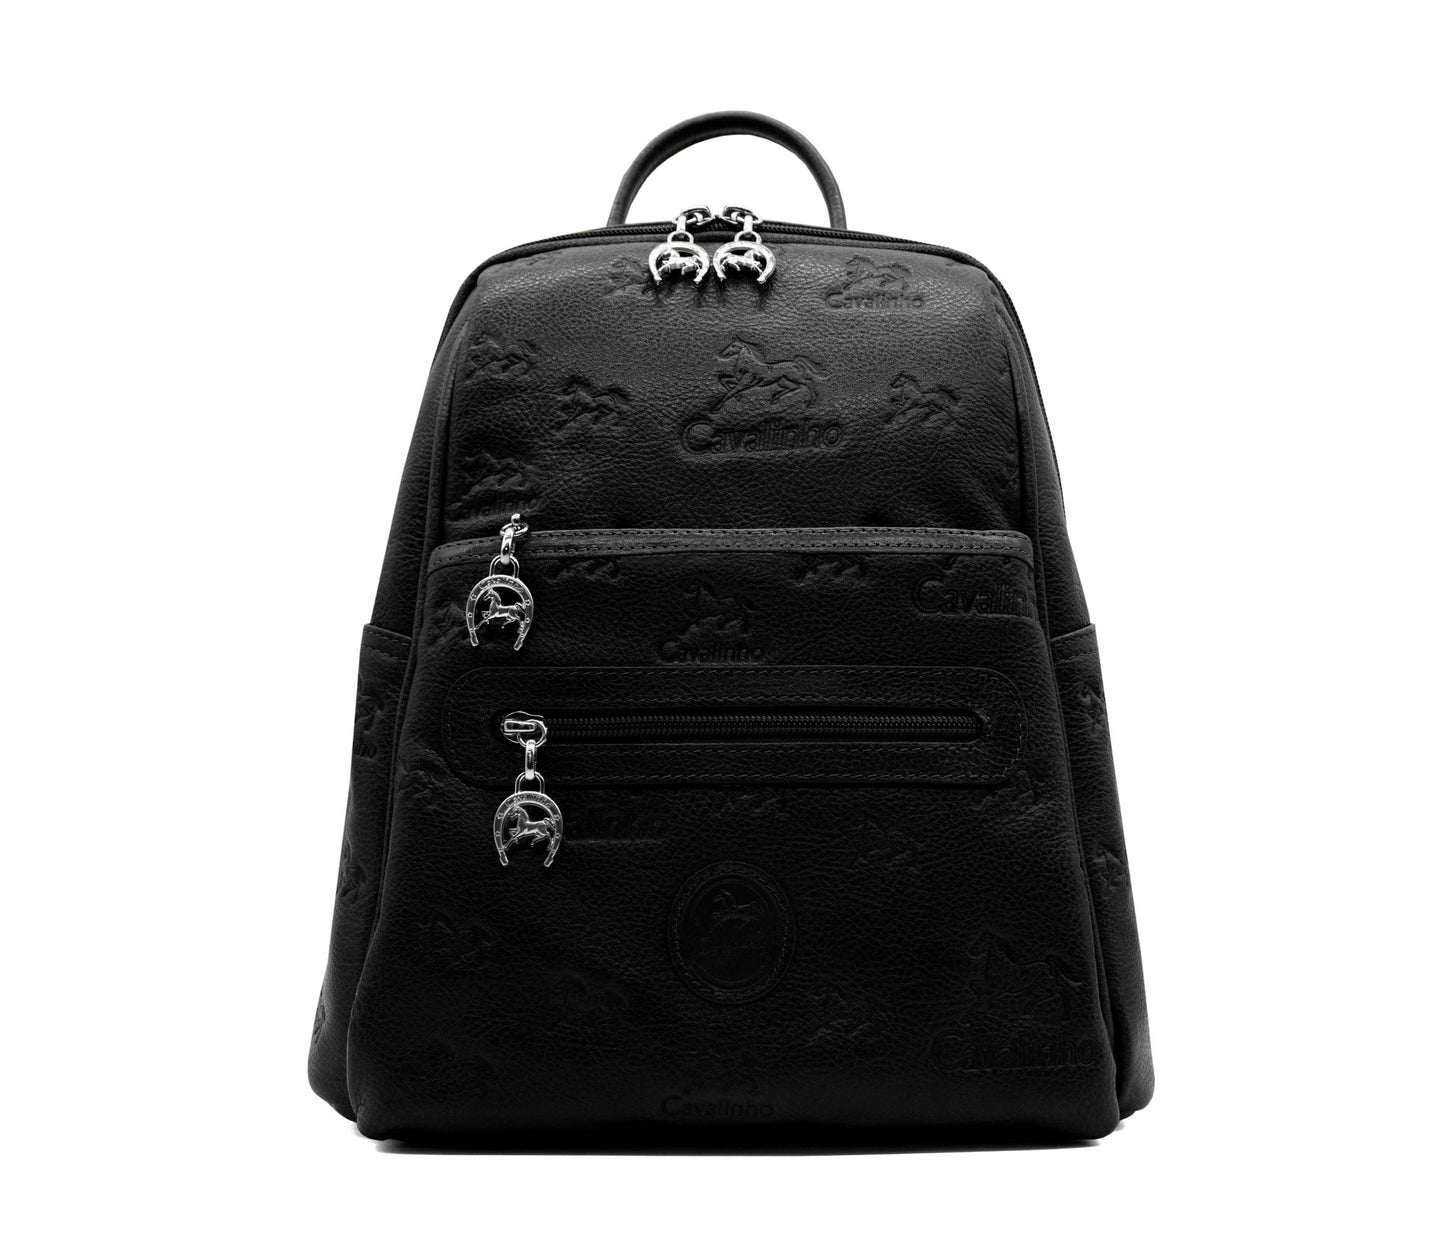 Cavalinho Cavalo Lusitano Leather Backpack - Black - 18090412.01_1